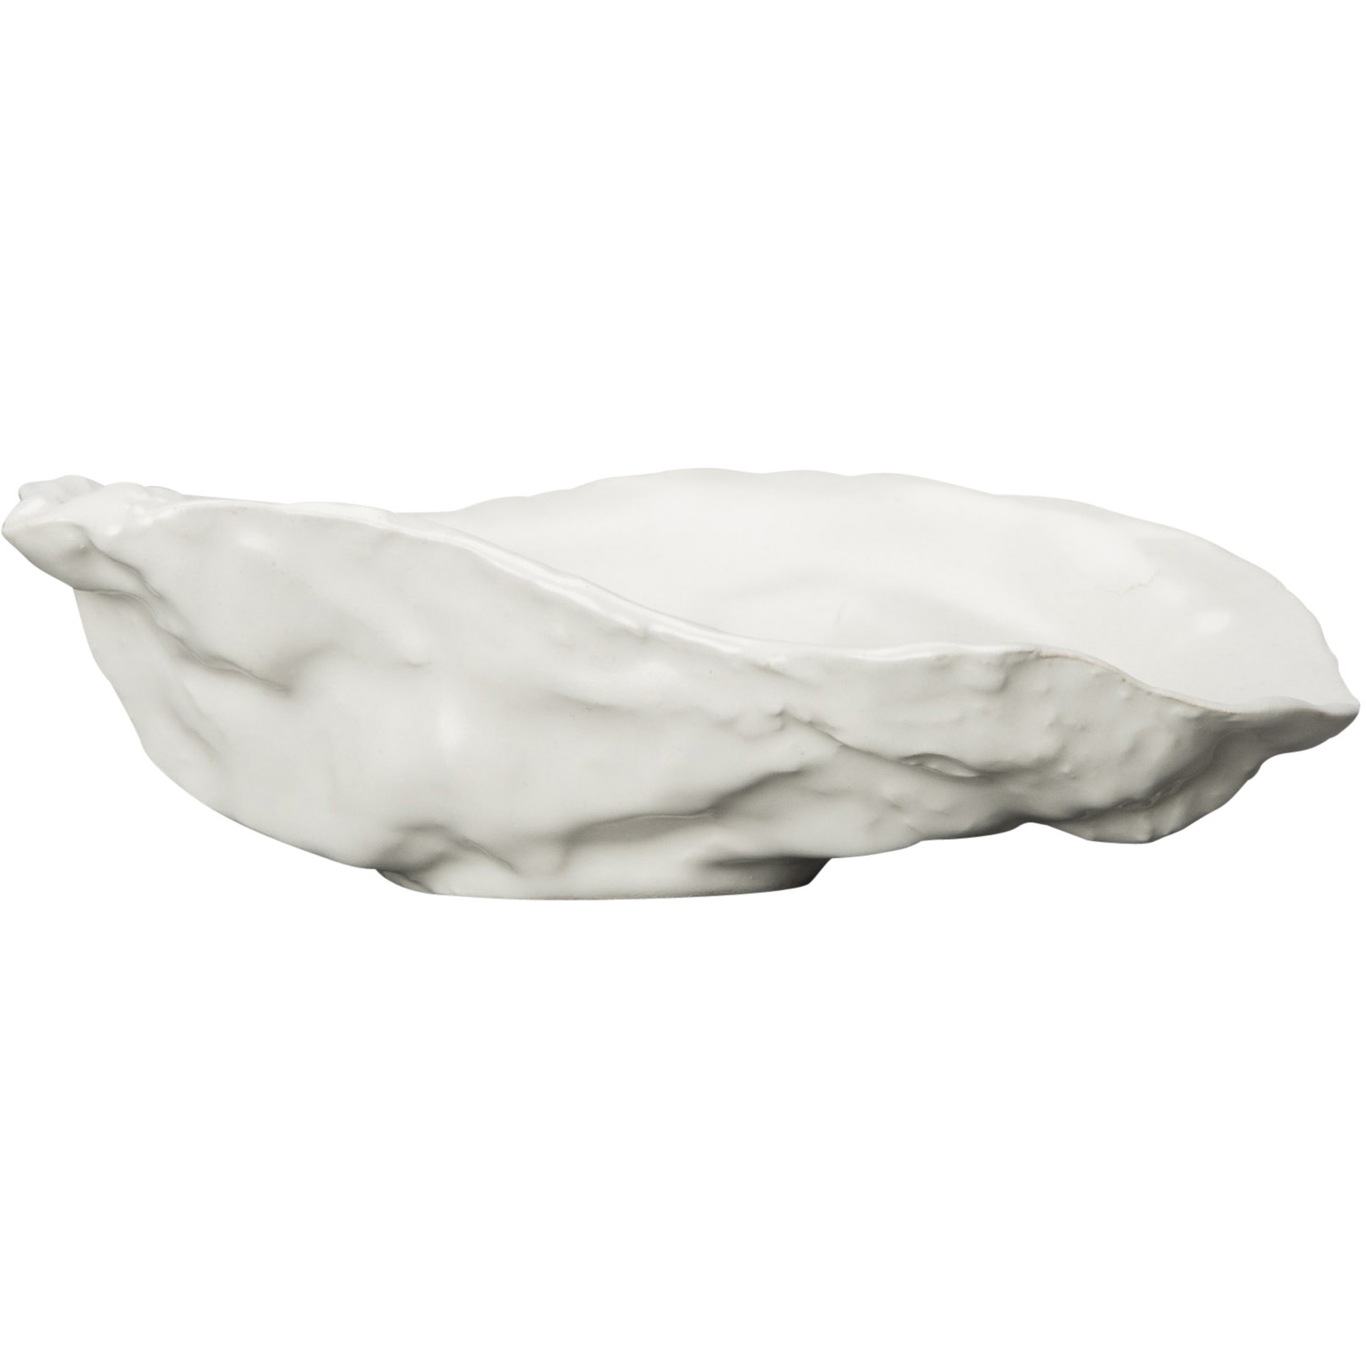 Oyster Bowl 8x13 cm, White